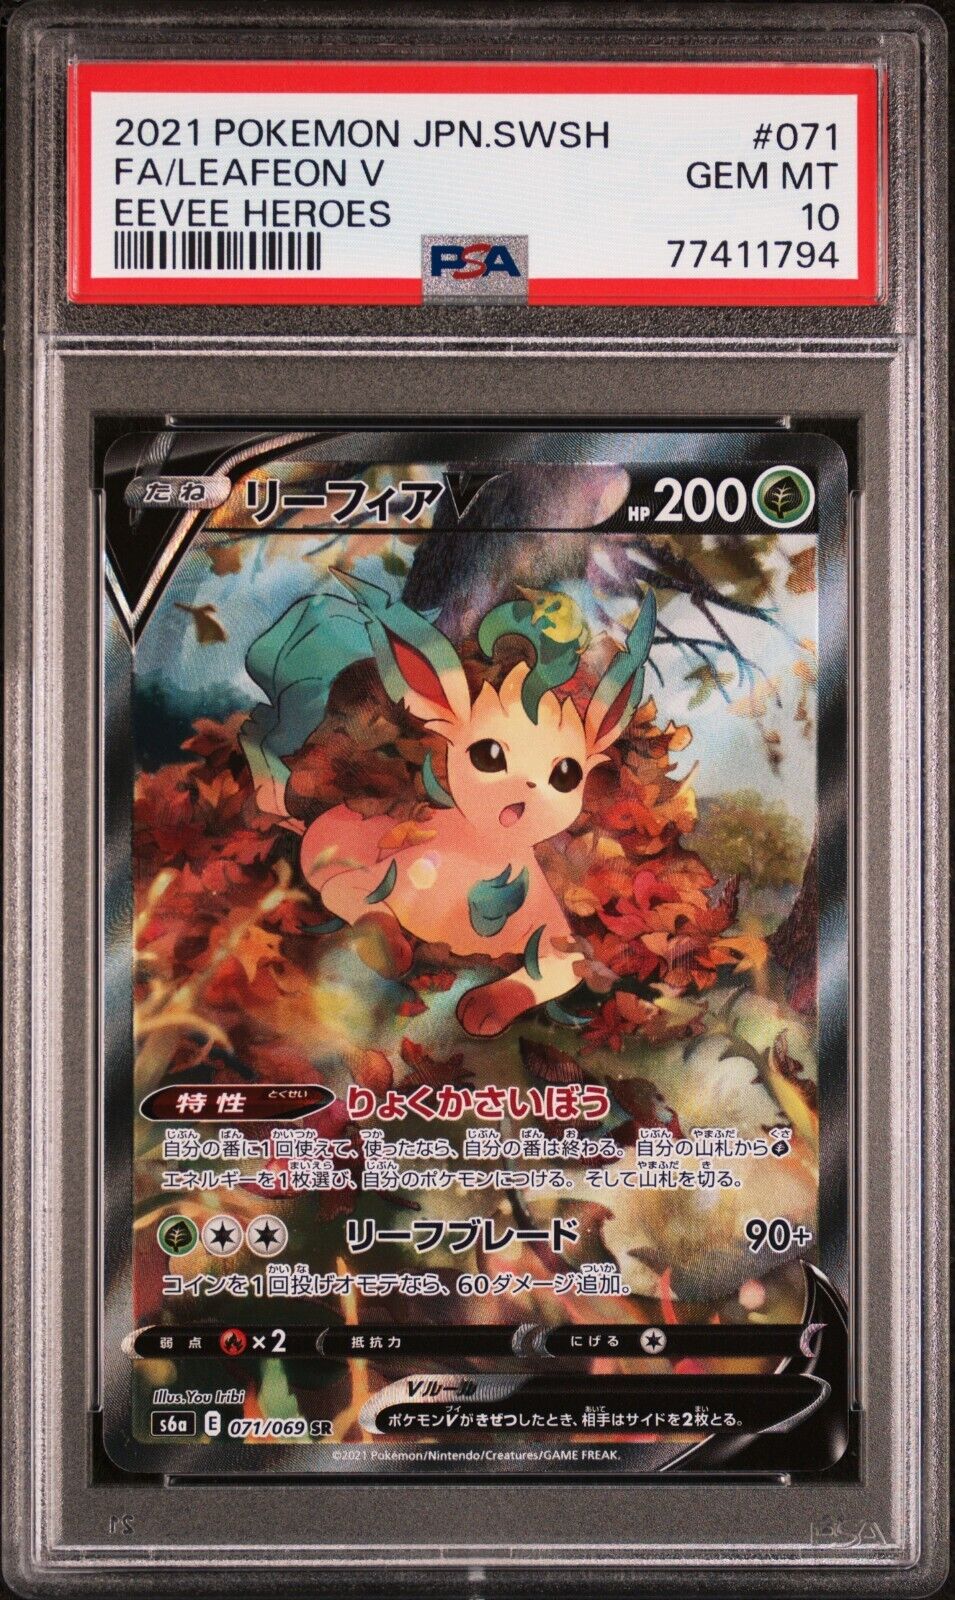 PSA 10 - Leafeon V Alt Art - 071/069 - Eevee Heroes S6a - Japanese Pokemon Card